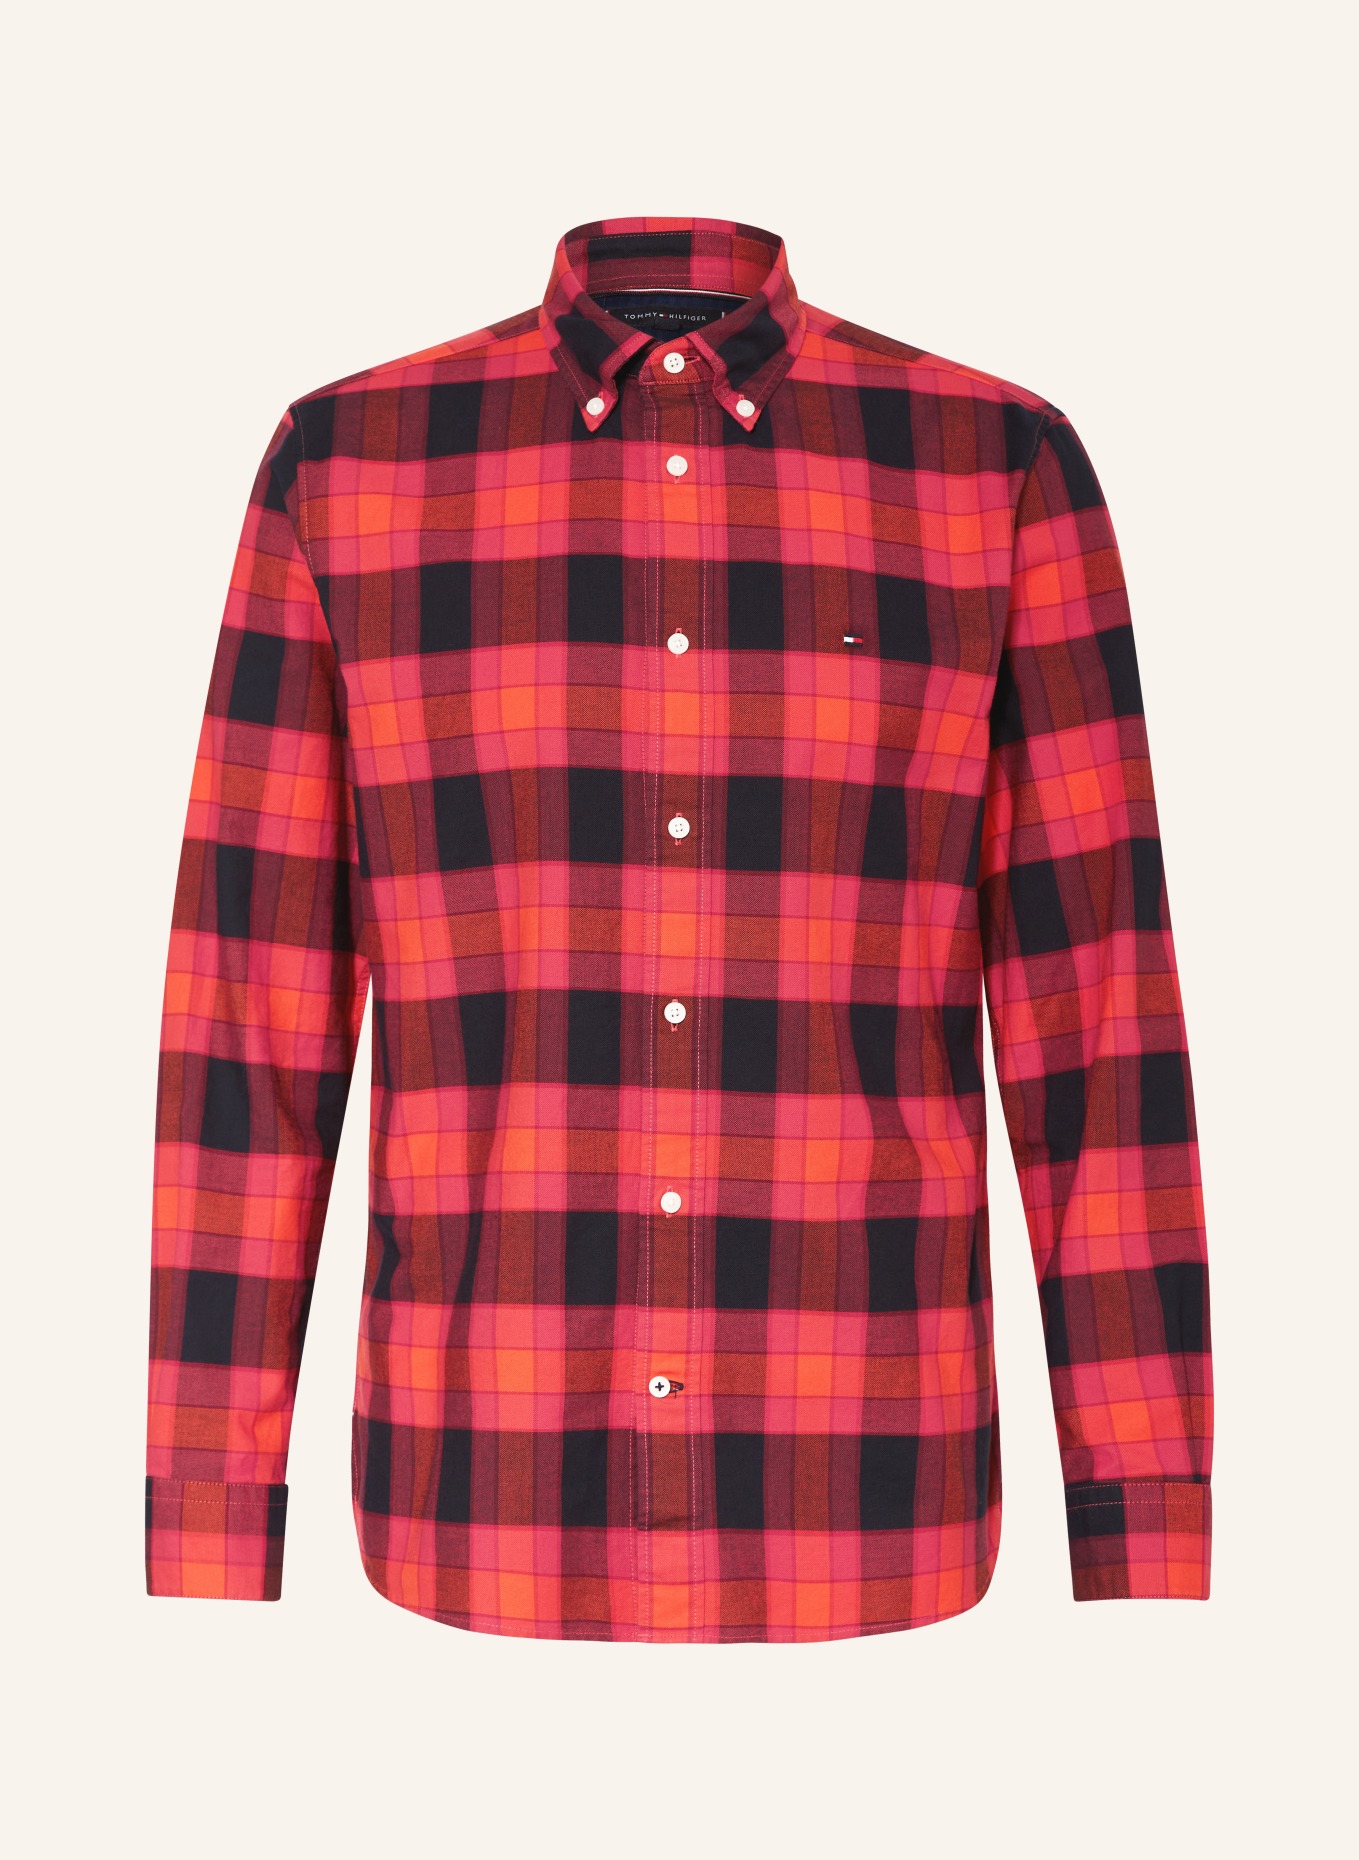 TOMMY HILFIGER Oxfordhemd Regular Fit, Farbe: ROT/ DUNKELBLAU (Bild 1)